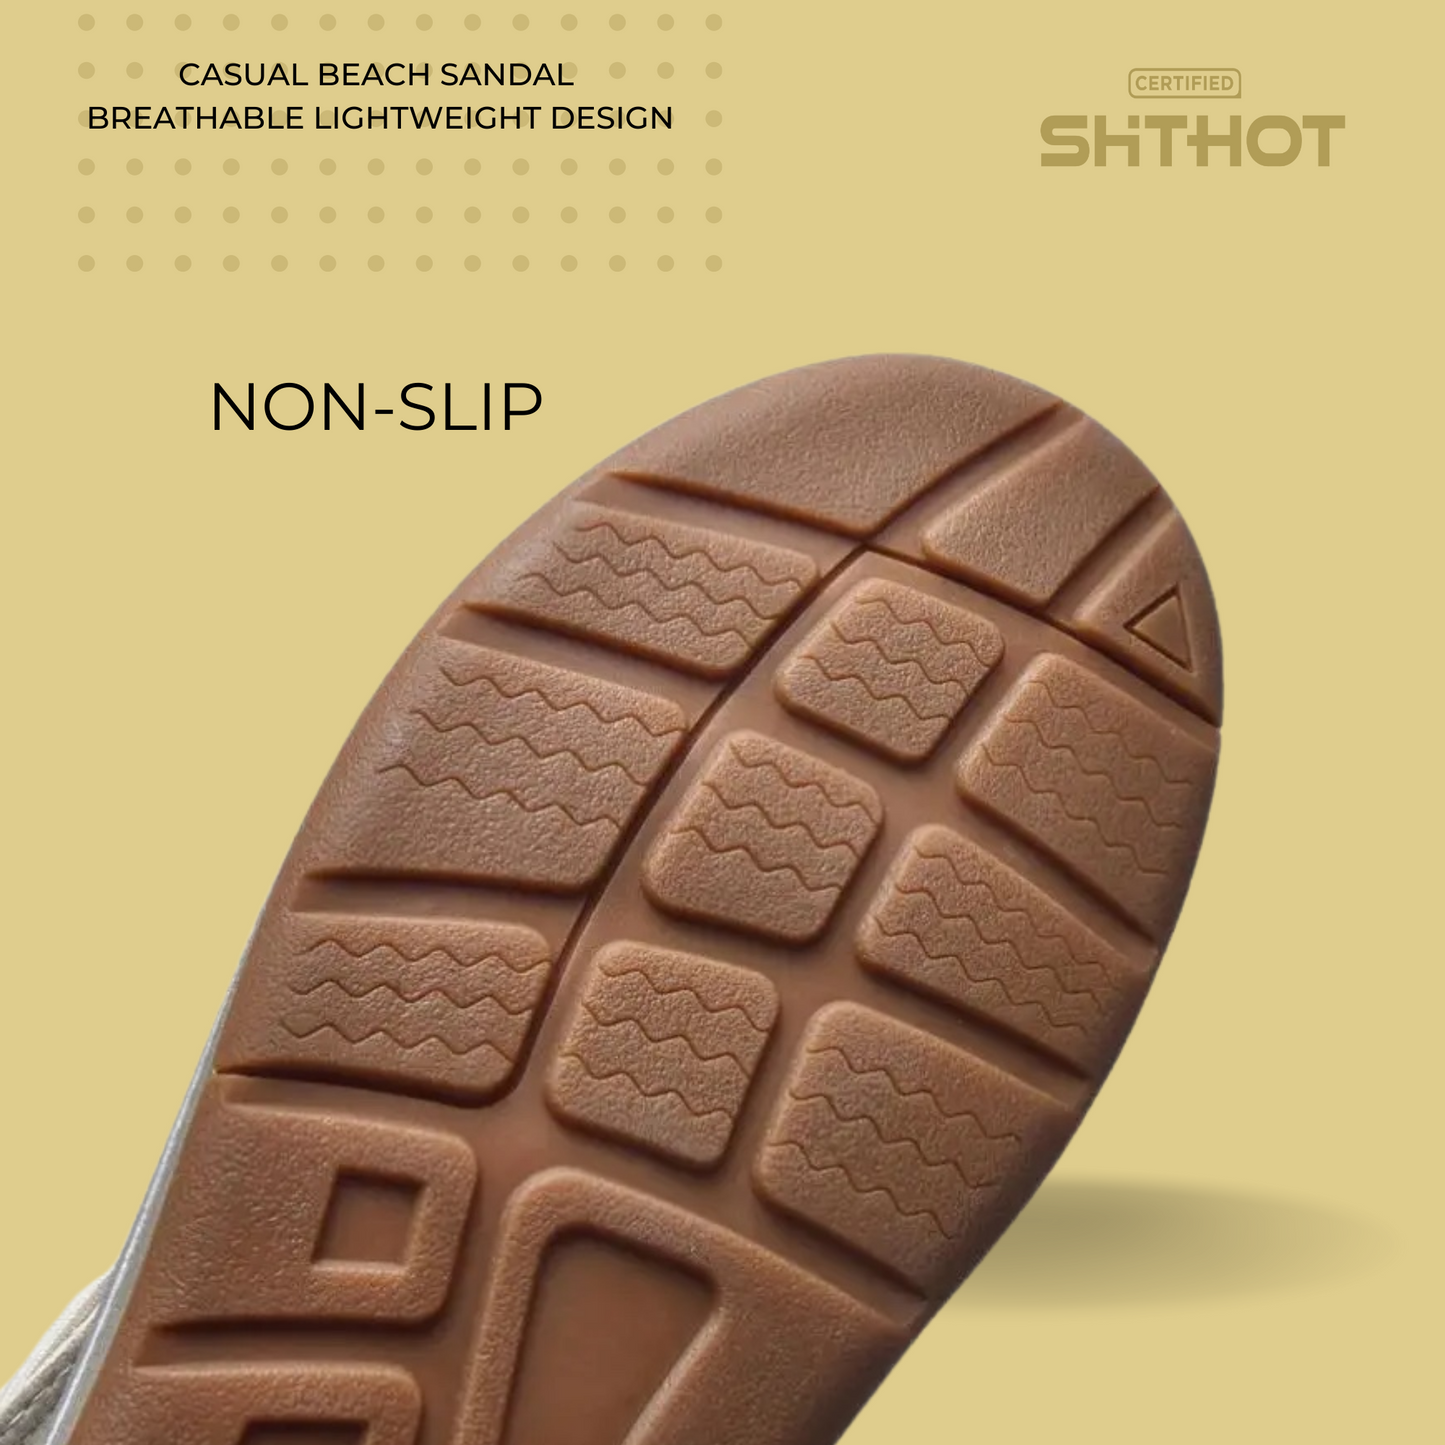 Certified ShitHot Handmade Sandals - Serenity